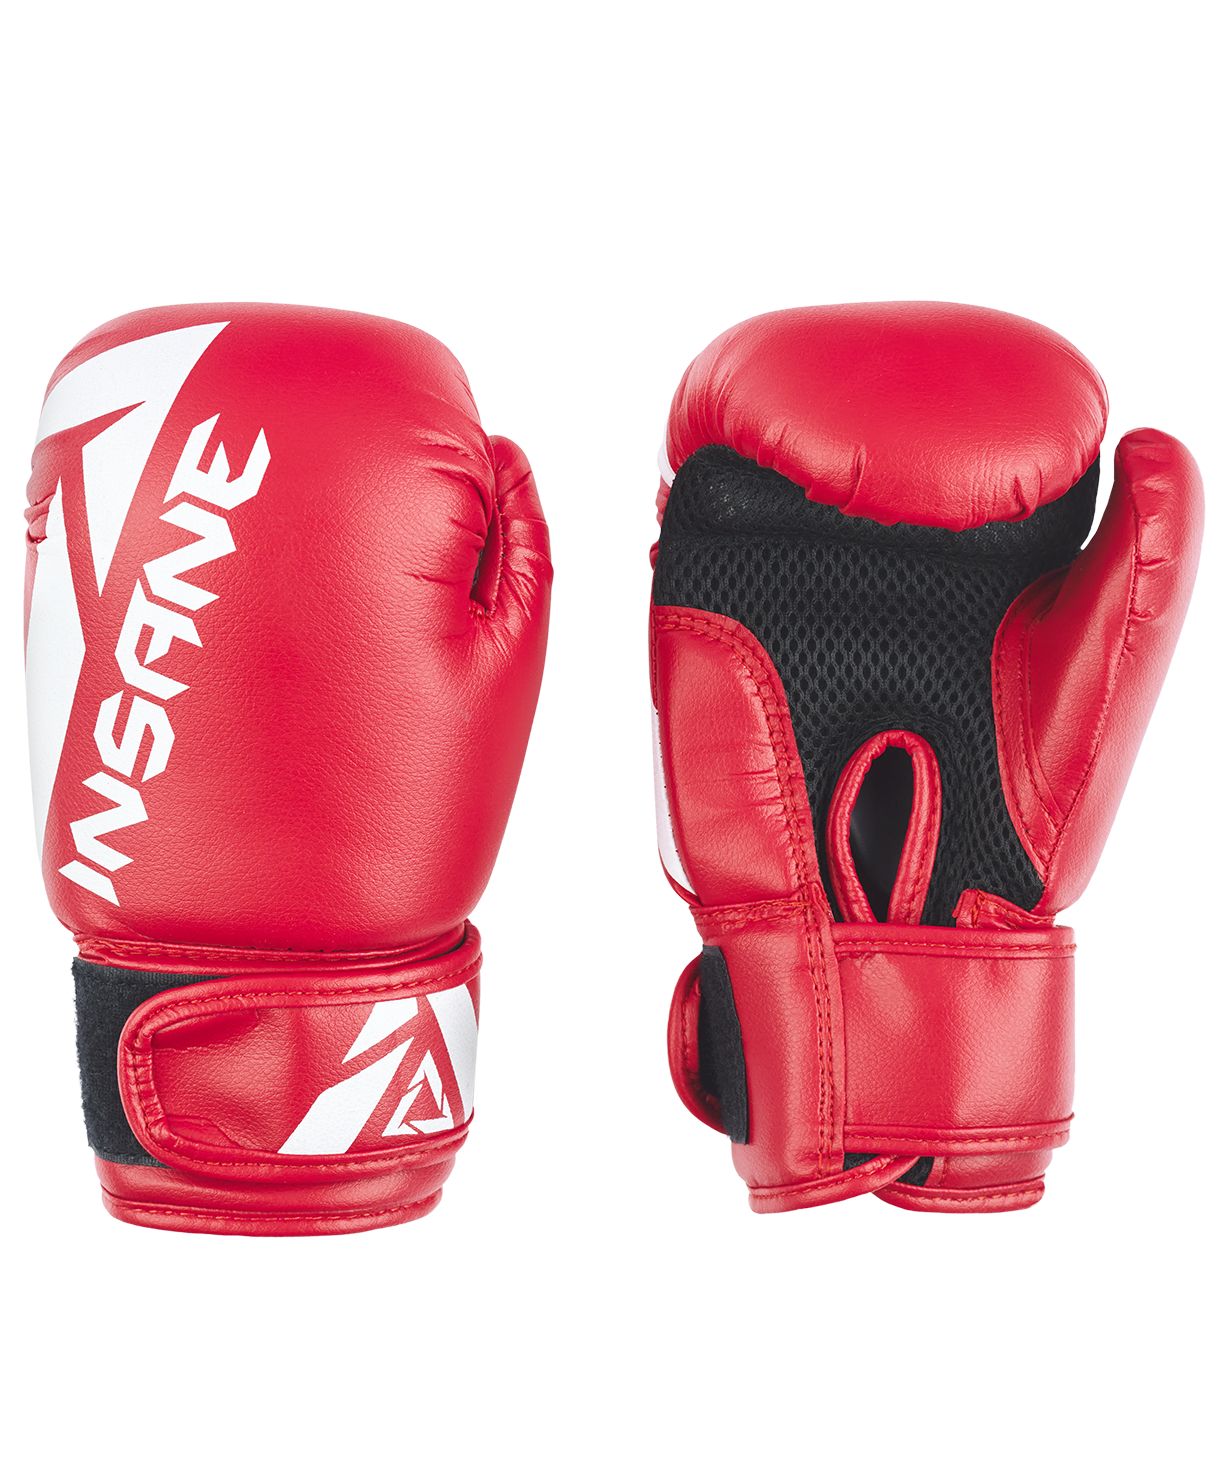 Перчатки боксёрские Insane Mars, ПУ, красный, размер 6 oz, пара